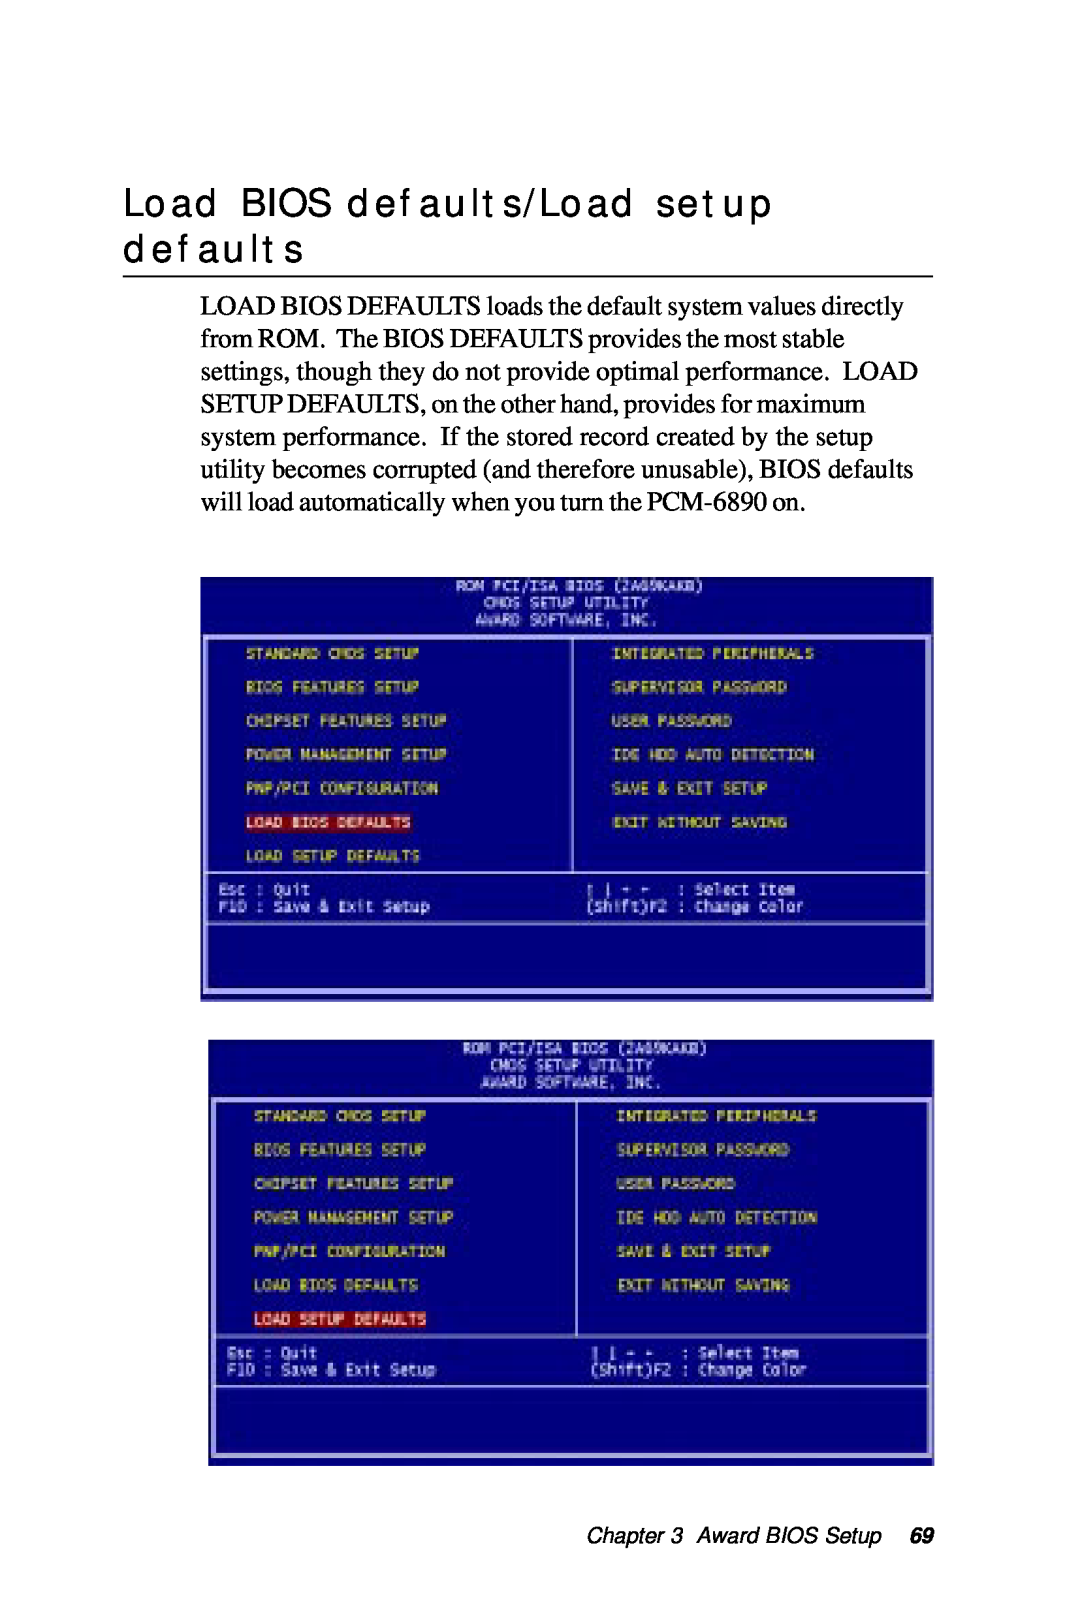 IBM All-in-One FC/Socket 370 Celeron, PCM-6890B manual Load BIOS defaults/Load setup defaults 